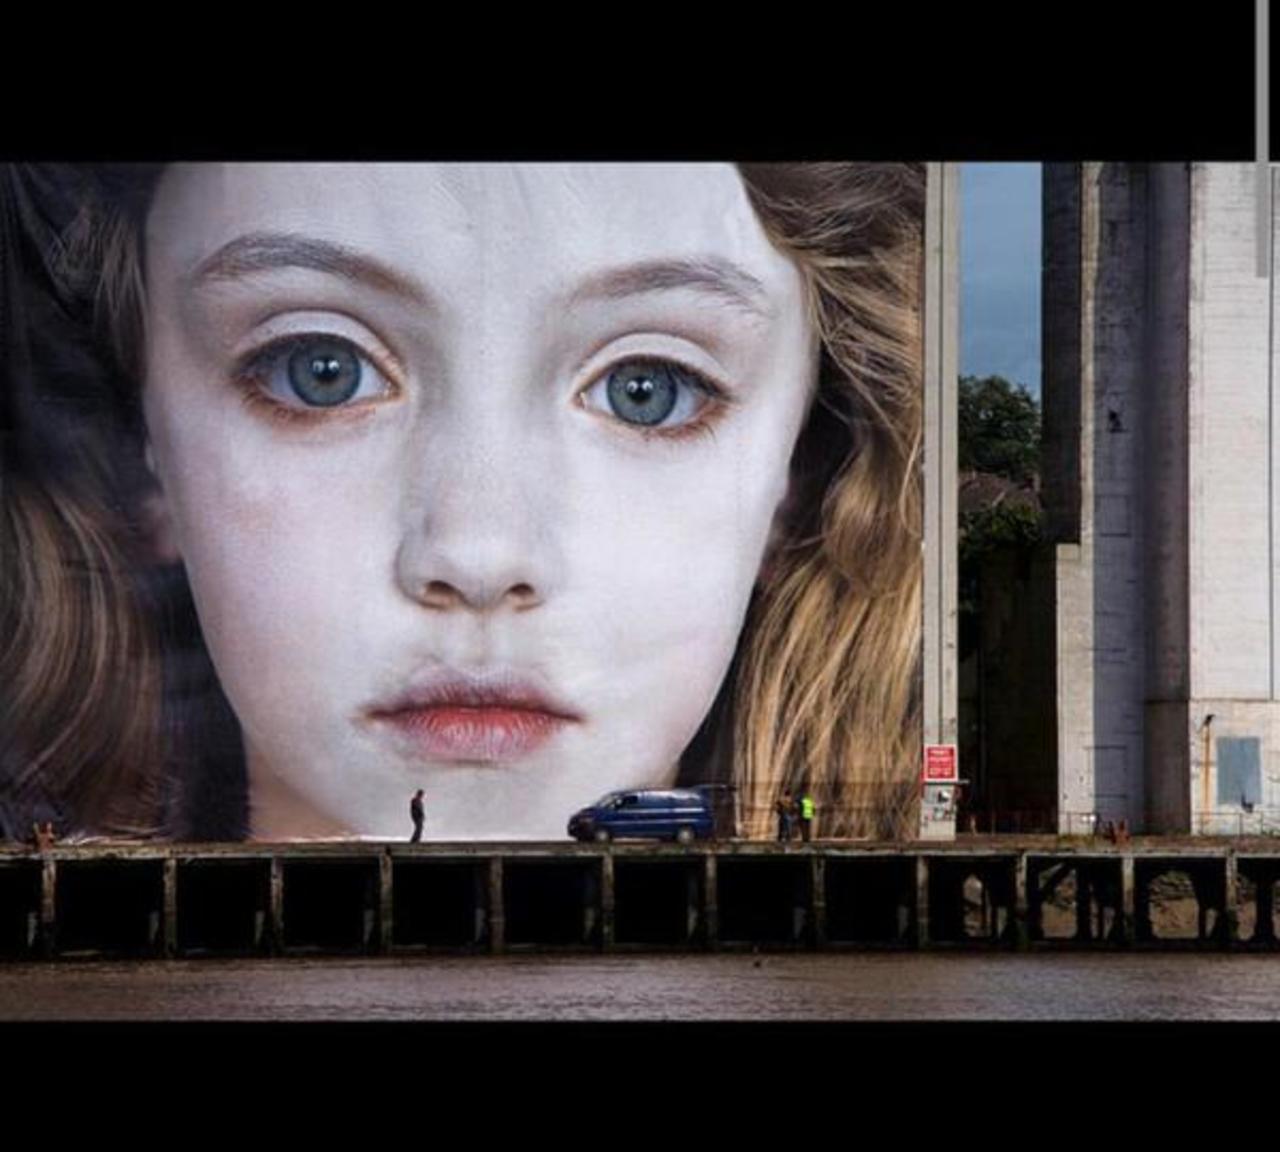 RT @upbyartists: Gottfried Helnwein
#streetart #art #graffiti #illustrator http://t.co/mJNzVCcUJg